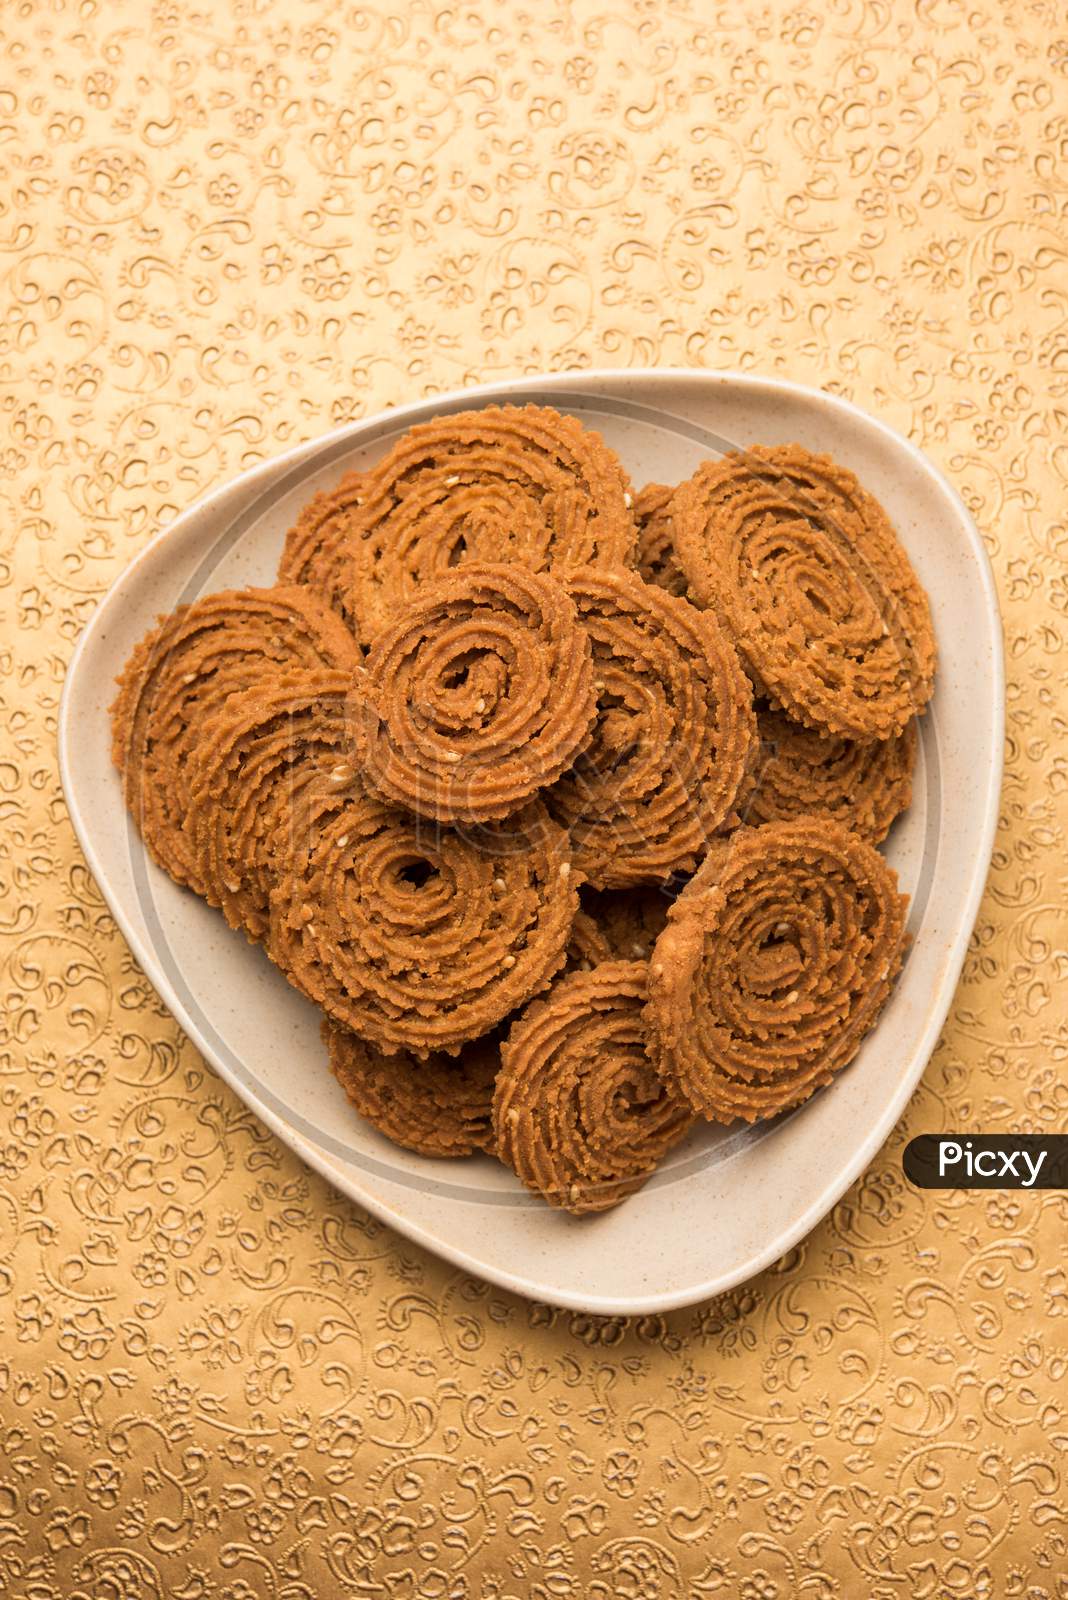 Chakli or Chakali or Murukku, popular salty food made during diwali festival in India